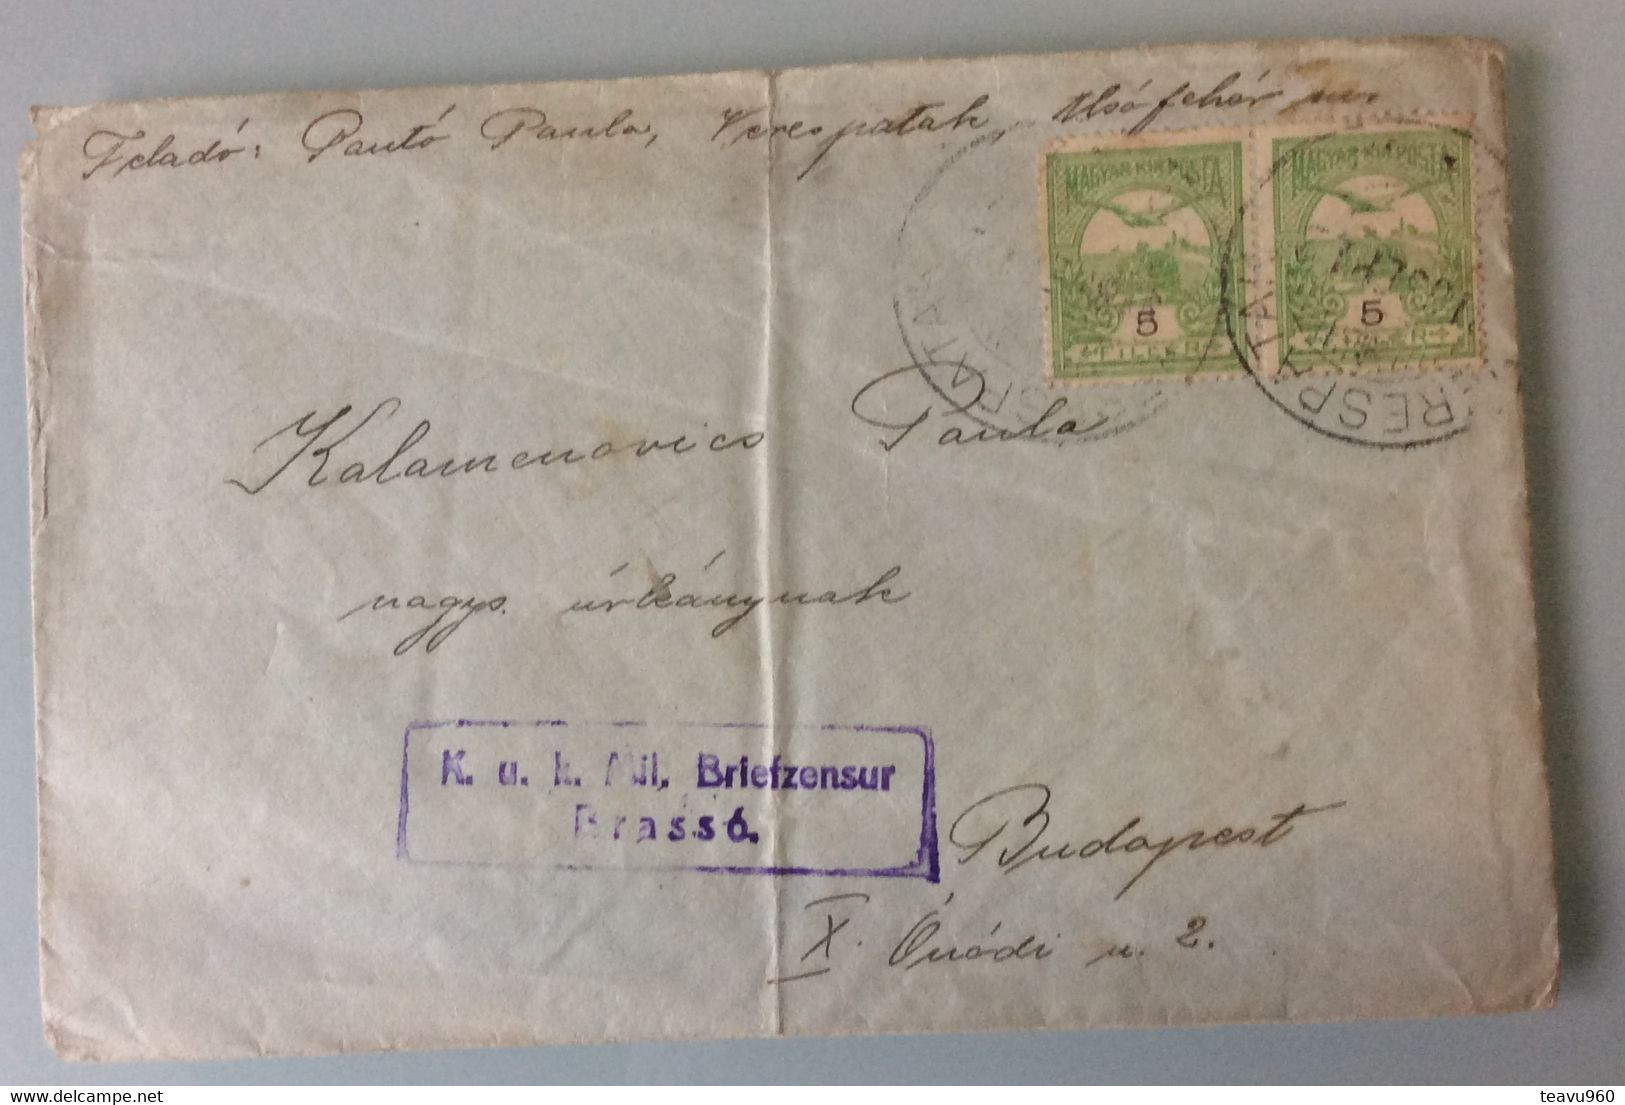 OLD POSTCARD Europe > Romania > 1881-1948 Kingdom > World War 1 Letters STAMP K.uk.Mil.BRIEFZENZUR  BRASSO 1916 - World War 1 Letters